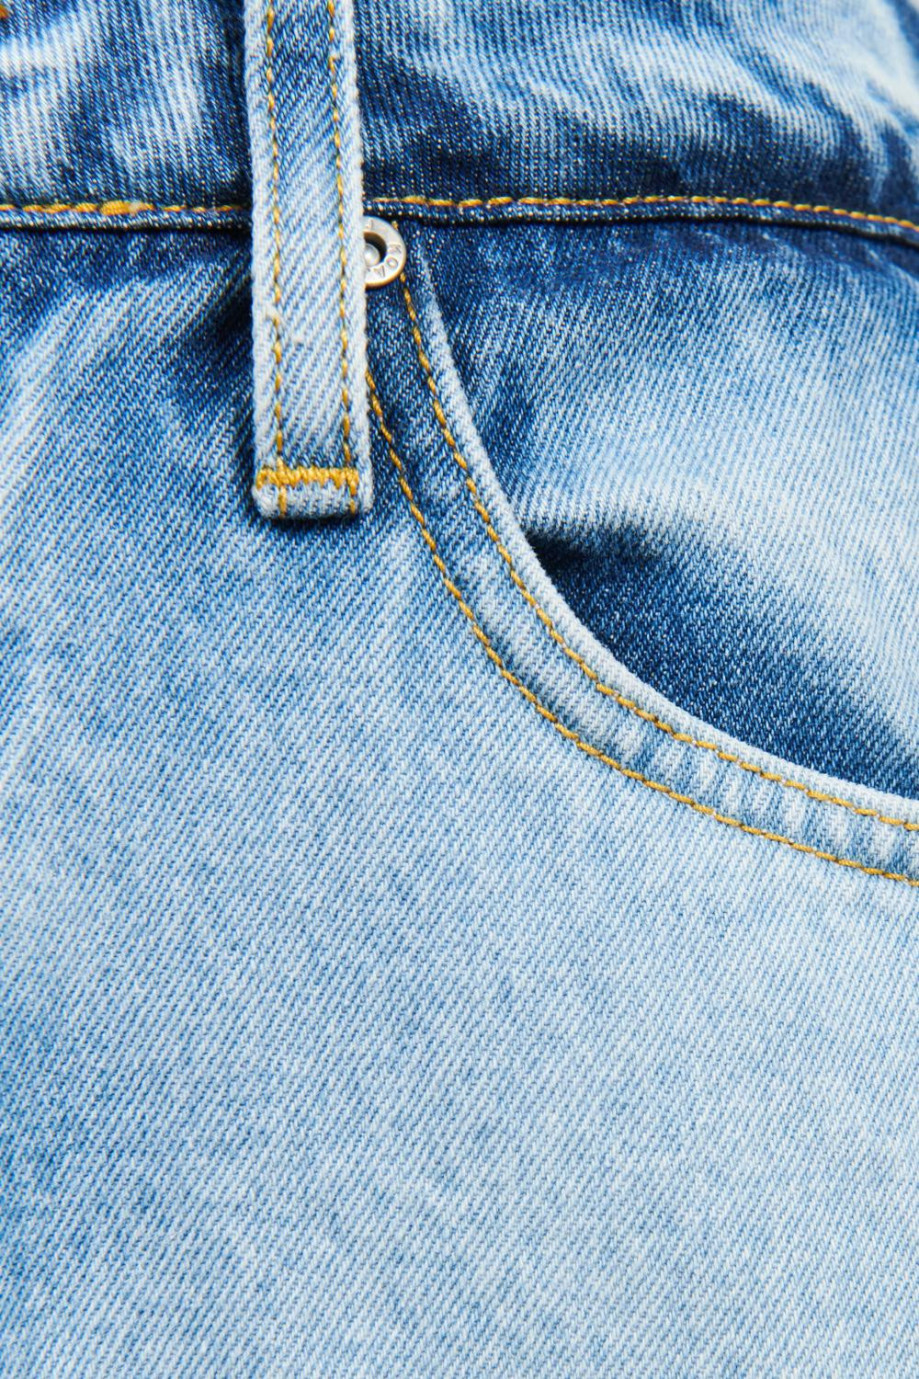 Falda azul claro en jean tiro alto con deshilado en borde inferior